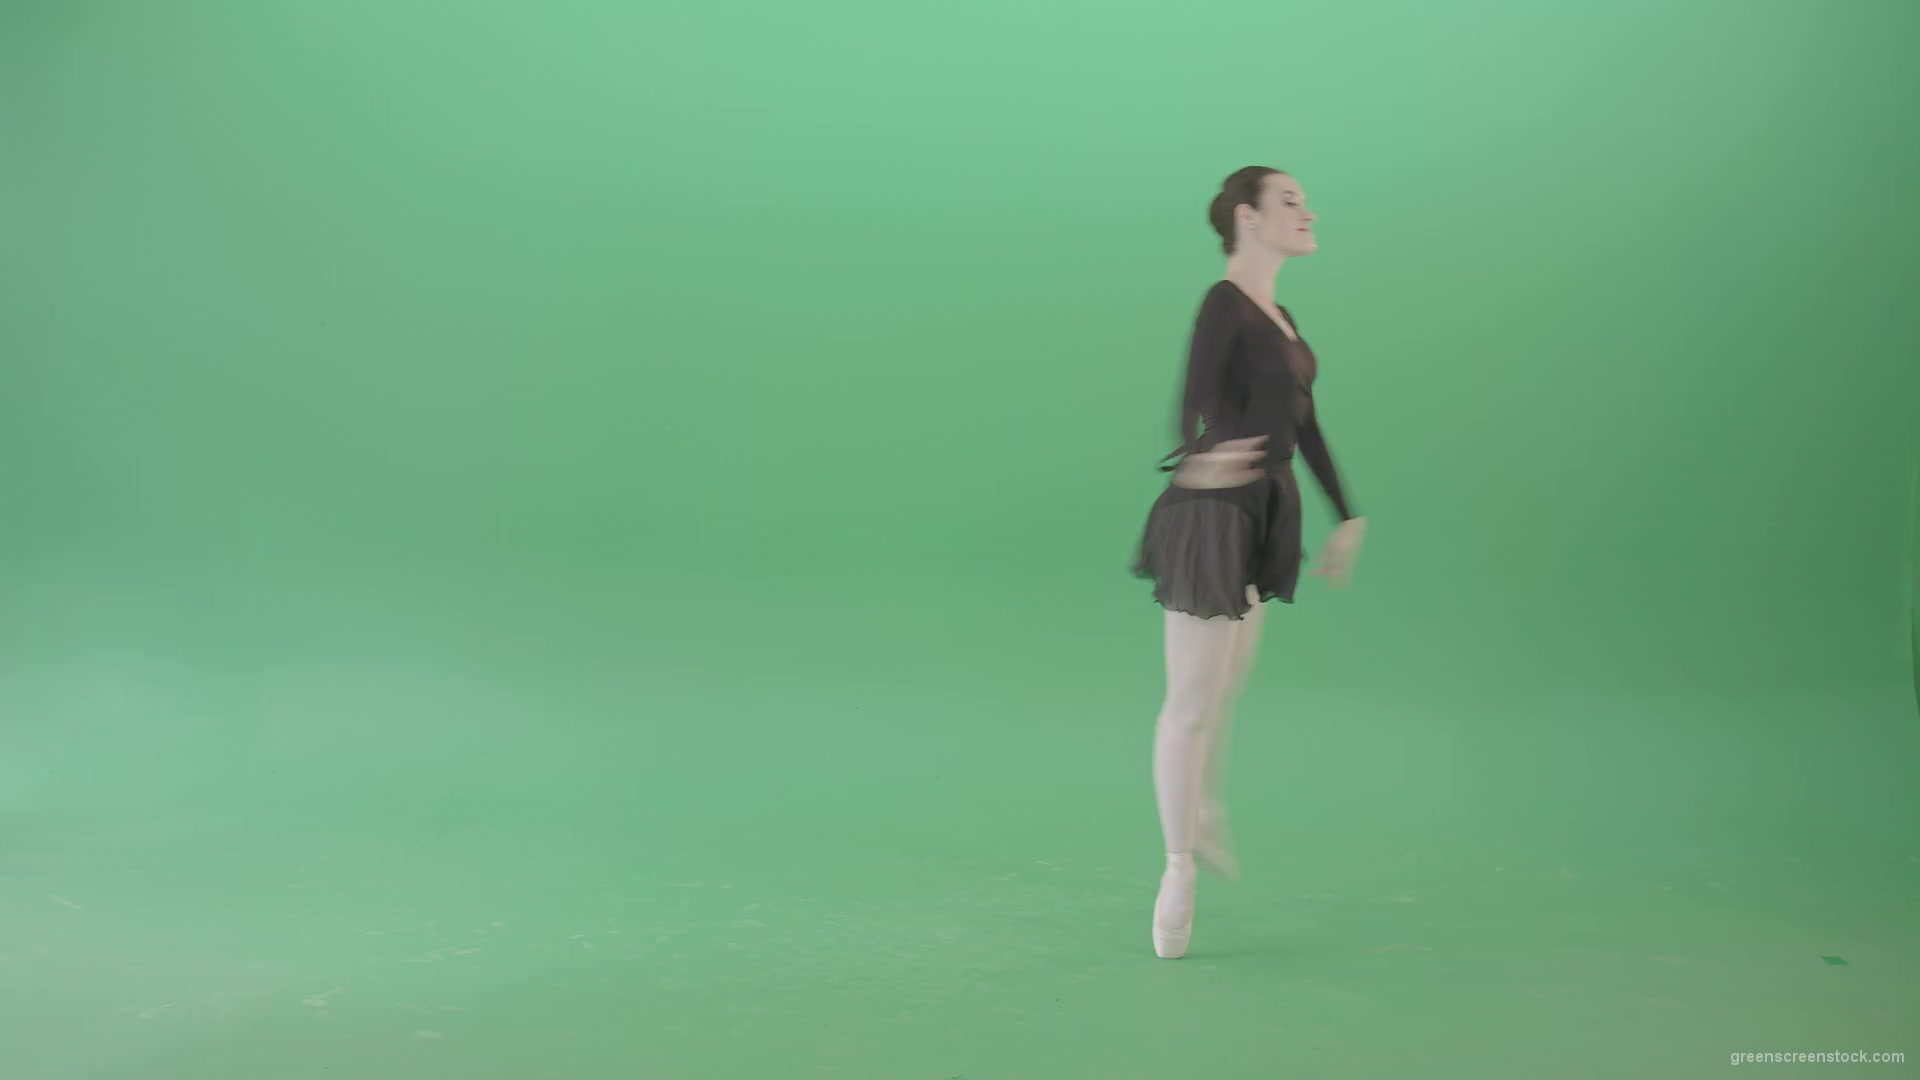 Russian-ballet-dancing-girl-in-black-body-wear-dress-dancing-isolated-on-green-screen-4K-Video-Footage-1920_008 Green Screen Stock